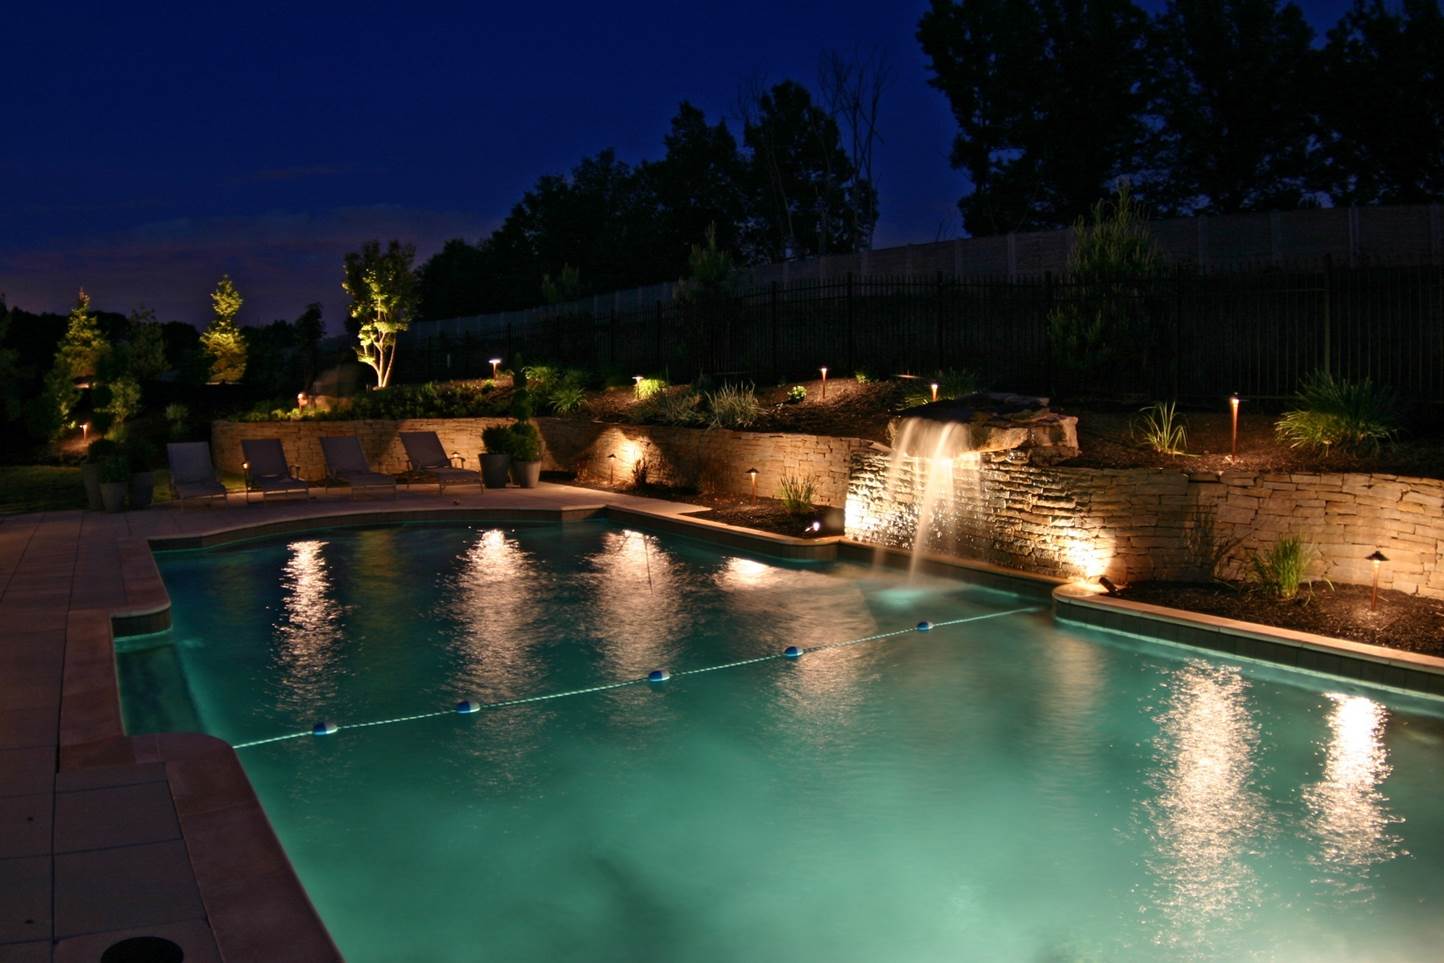 Swimming pool with nighttime lighting